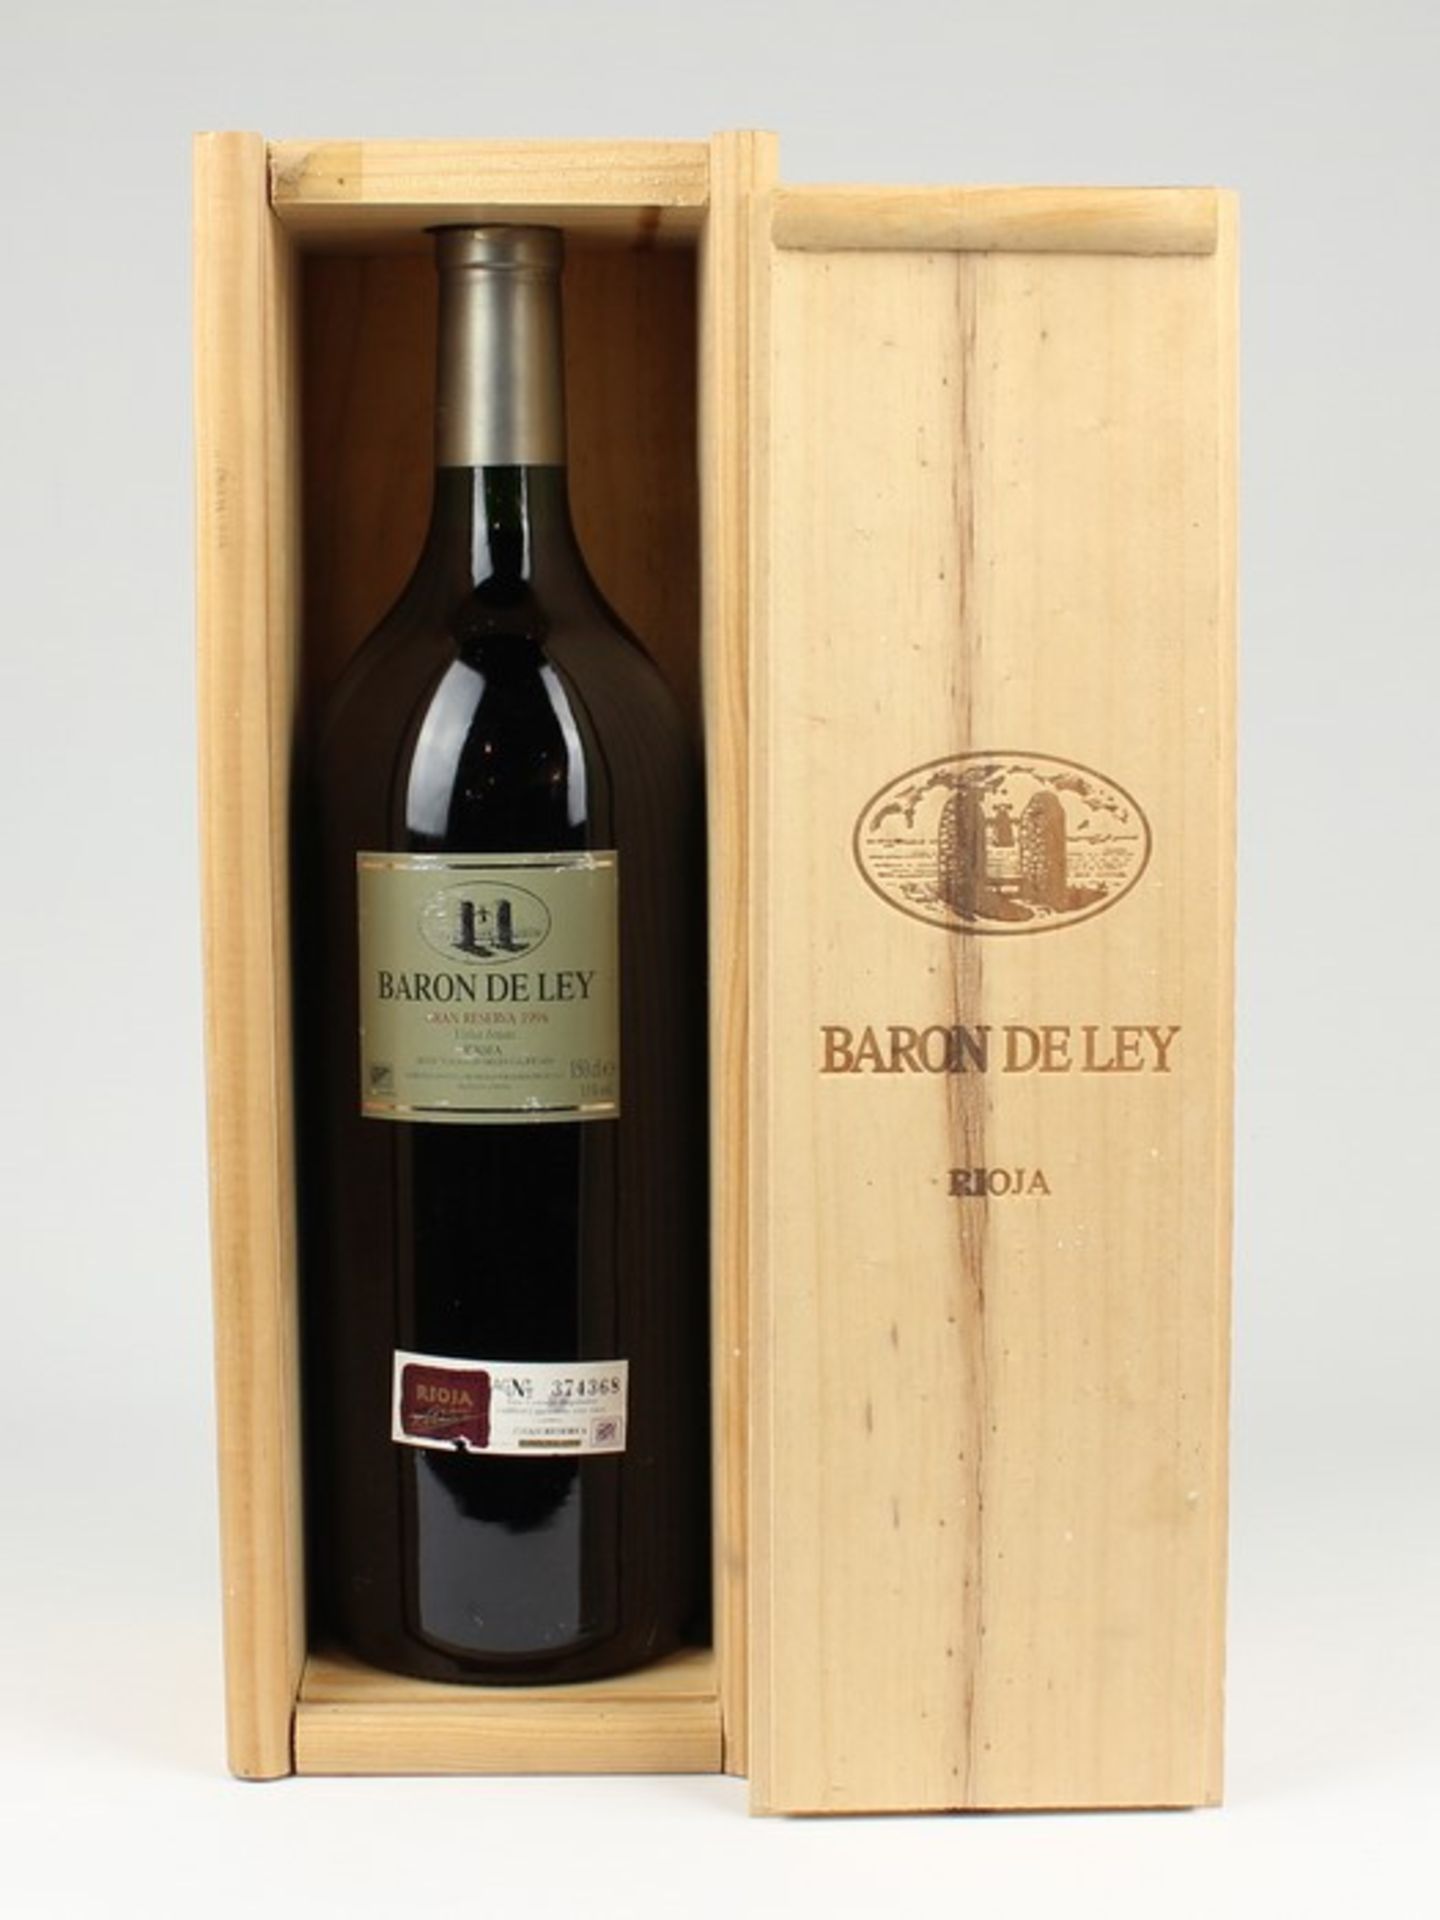 Rotwein1 Magnumfl., 150 cl., Spanien, Baron de Ley, Gran Reserva 1994, Rioja, Nr. 374368, in